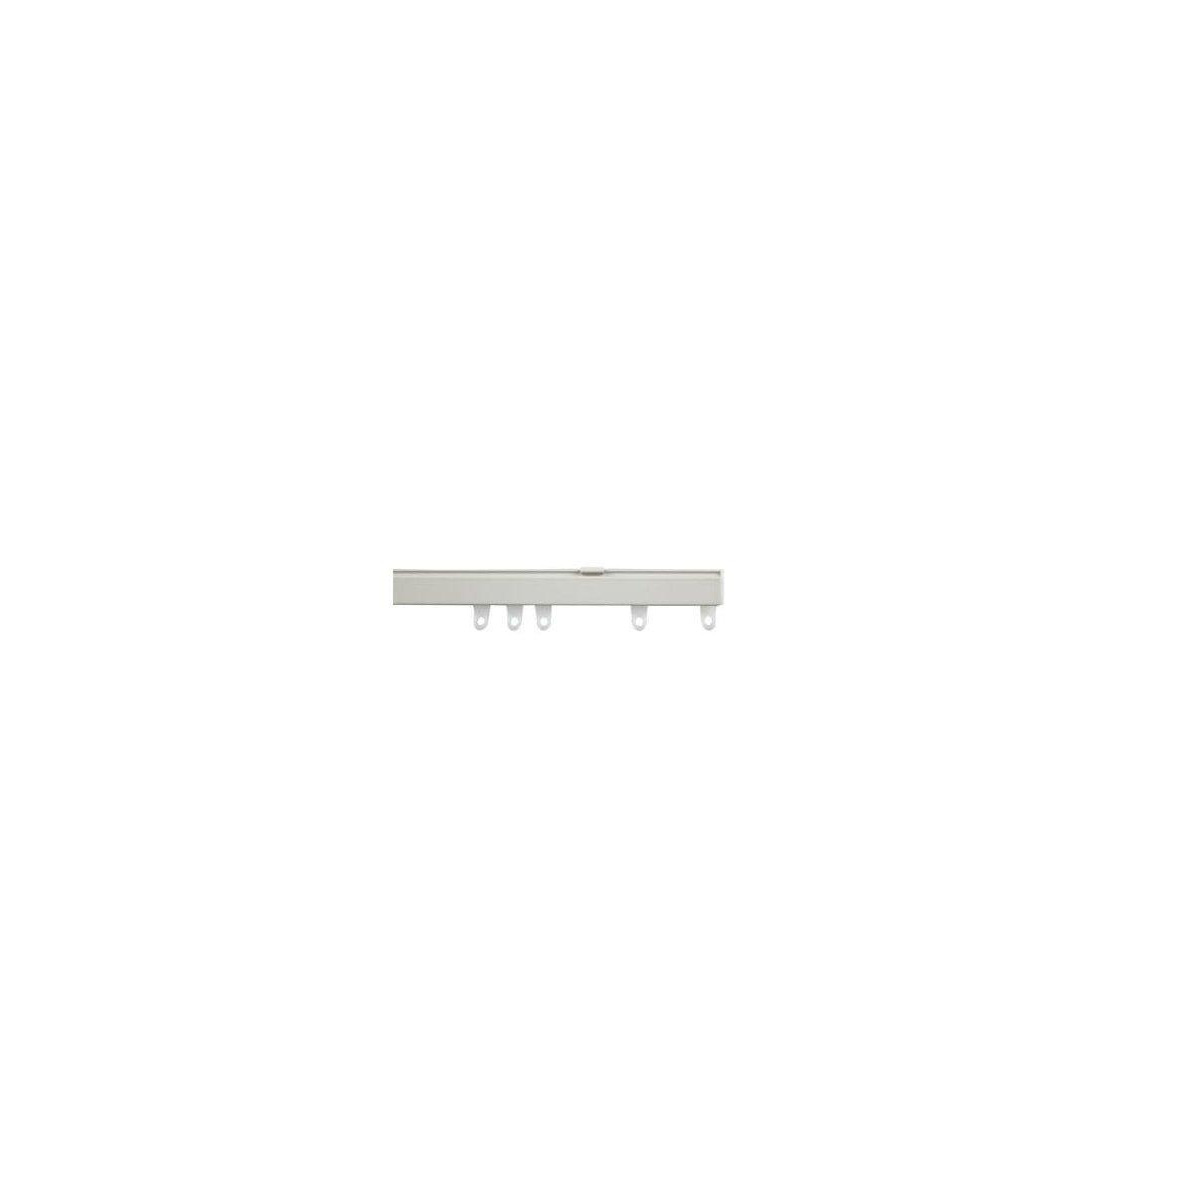 White Fineline Aluminium Curtain Track - image 1